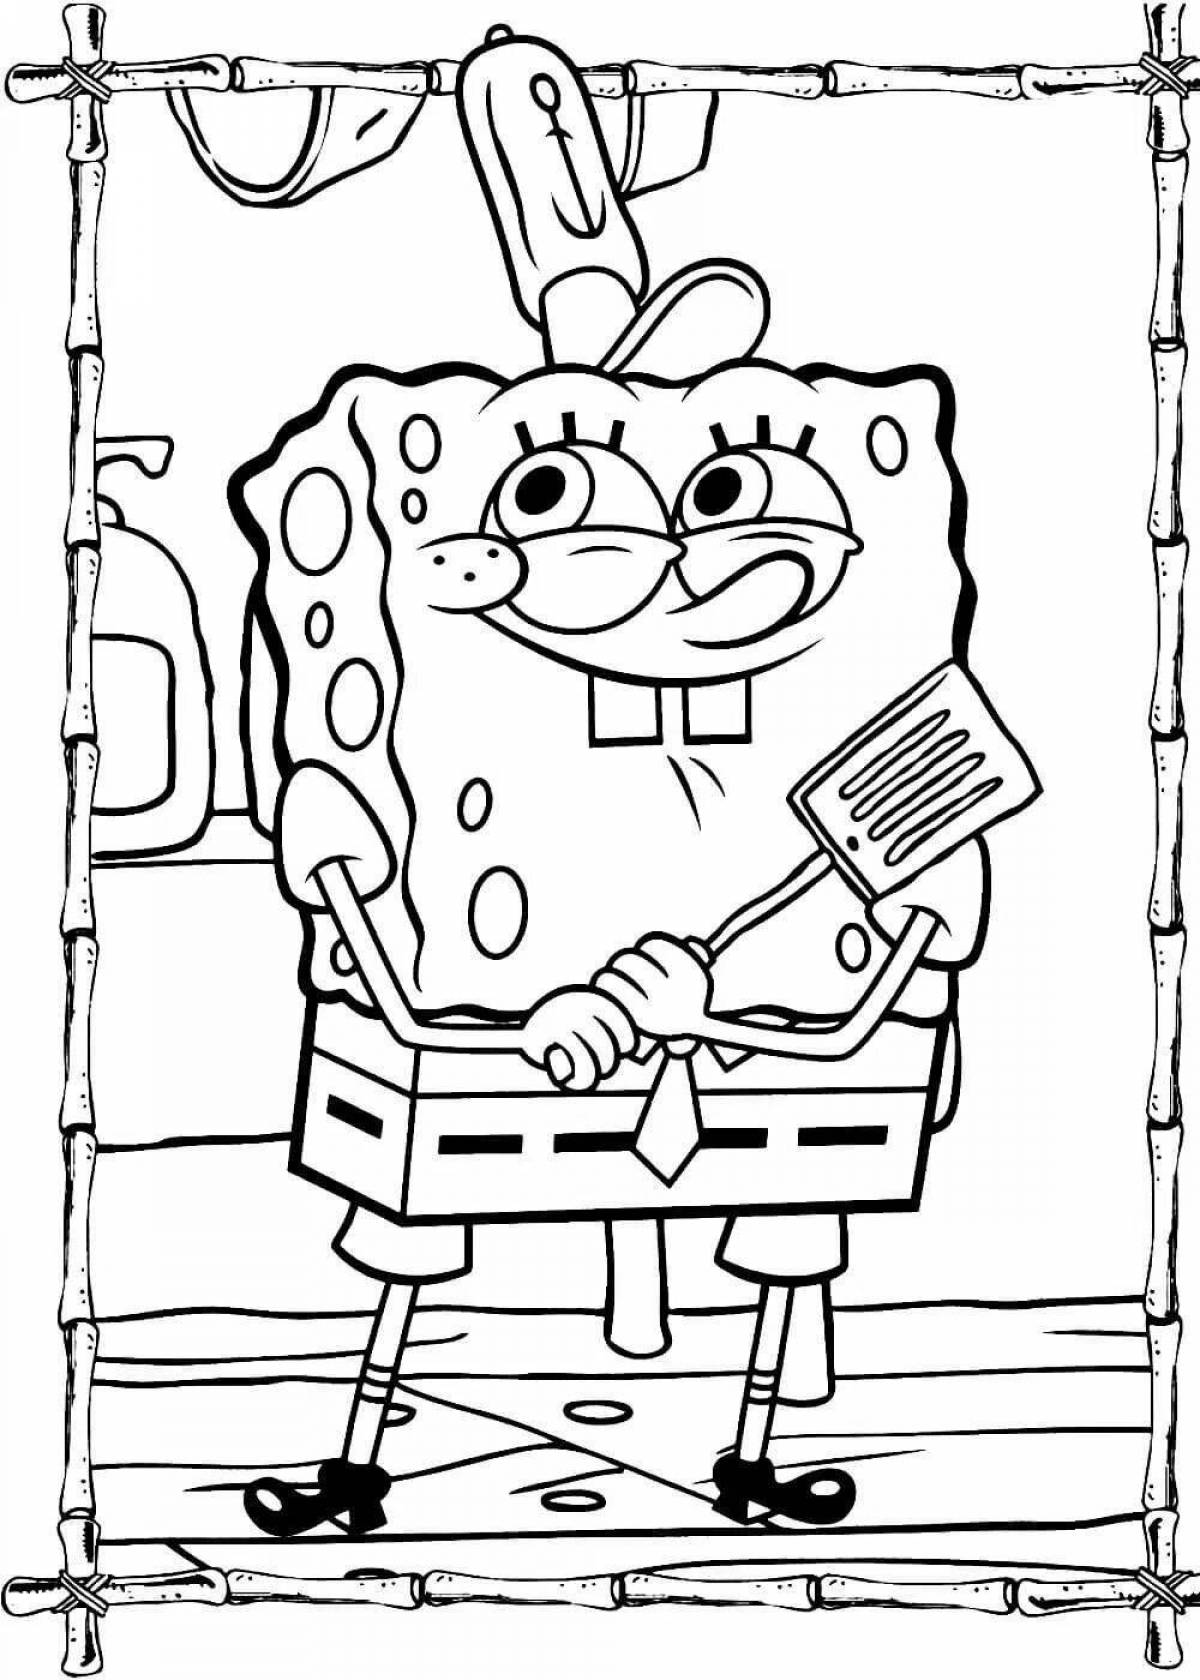 Joyful spongebob coloring for boys